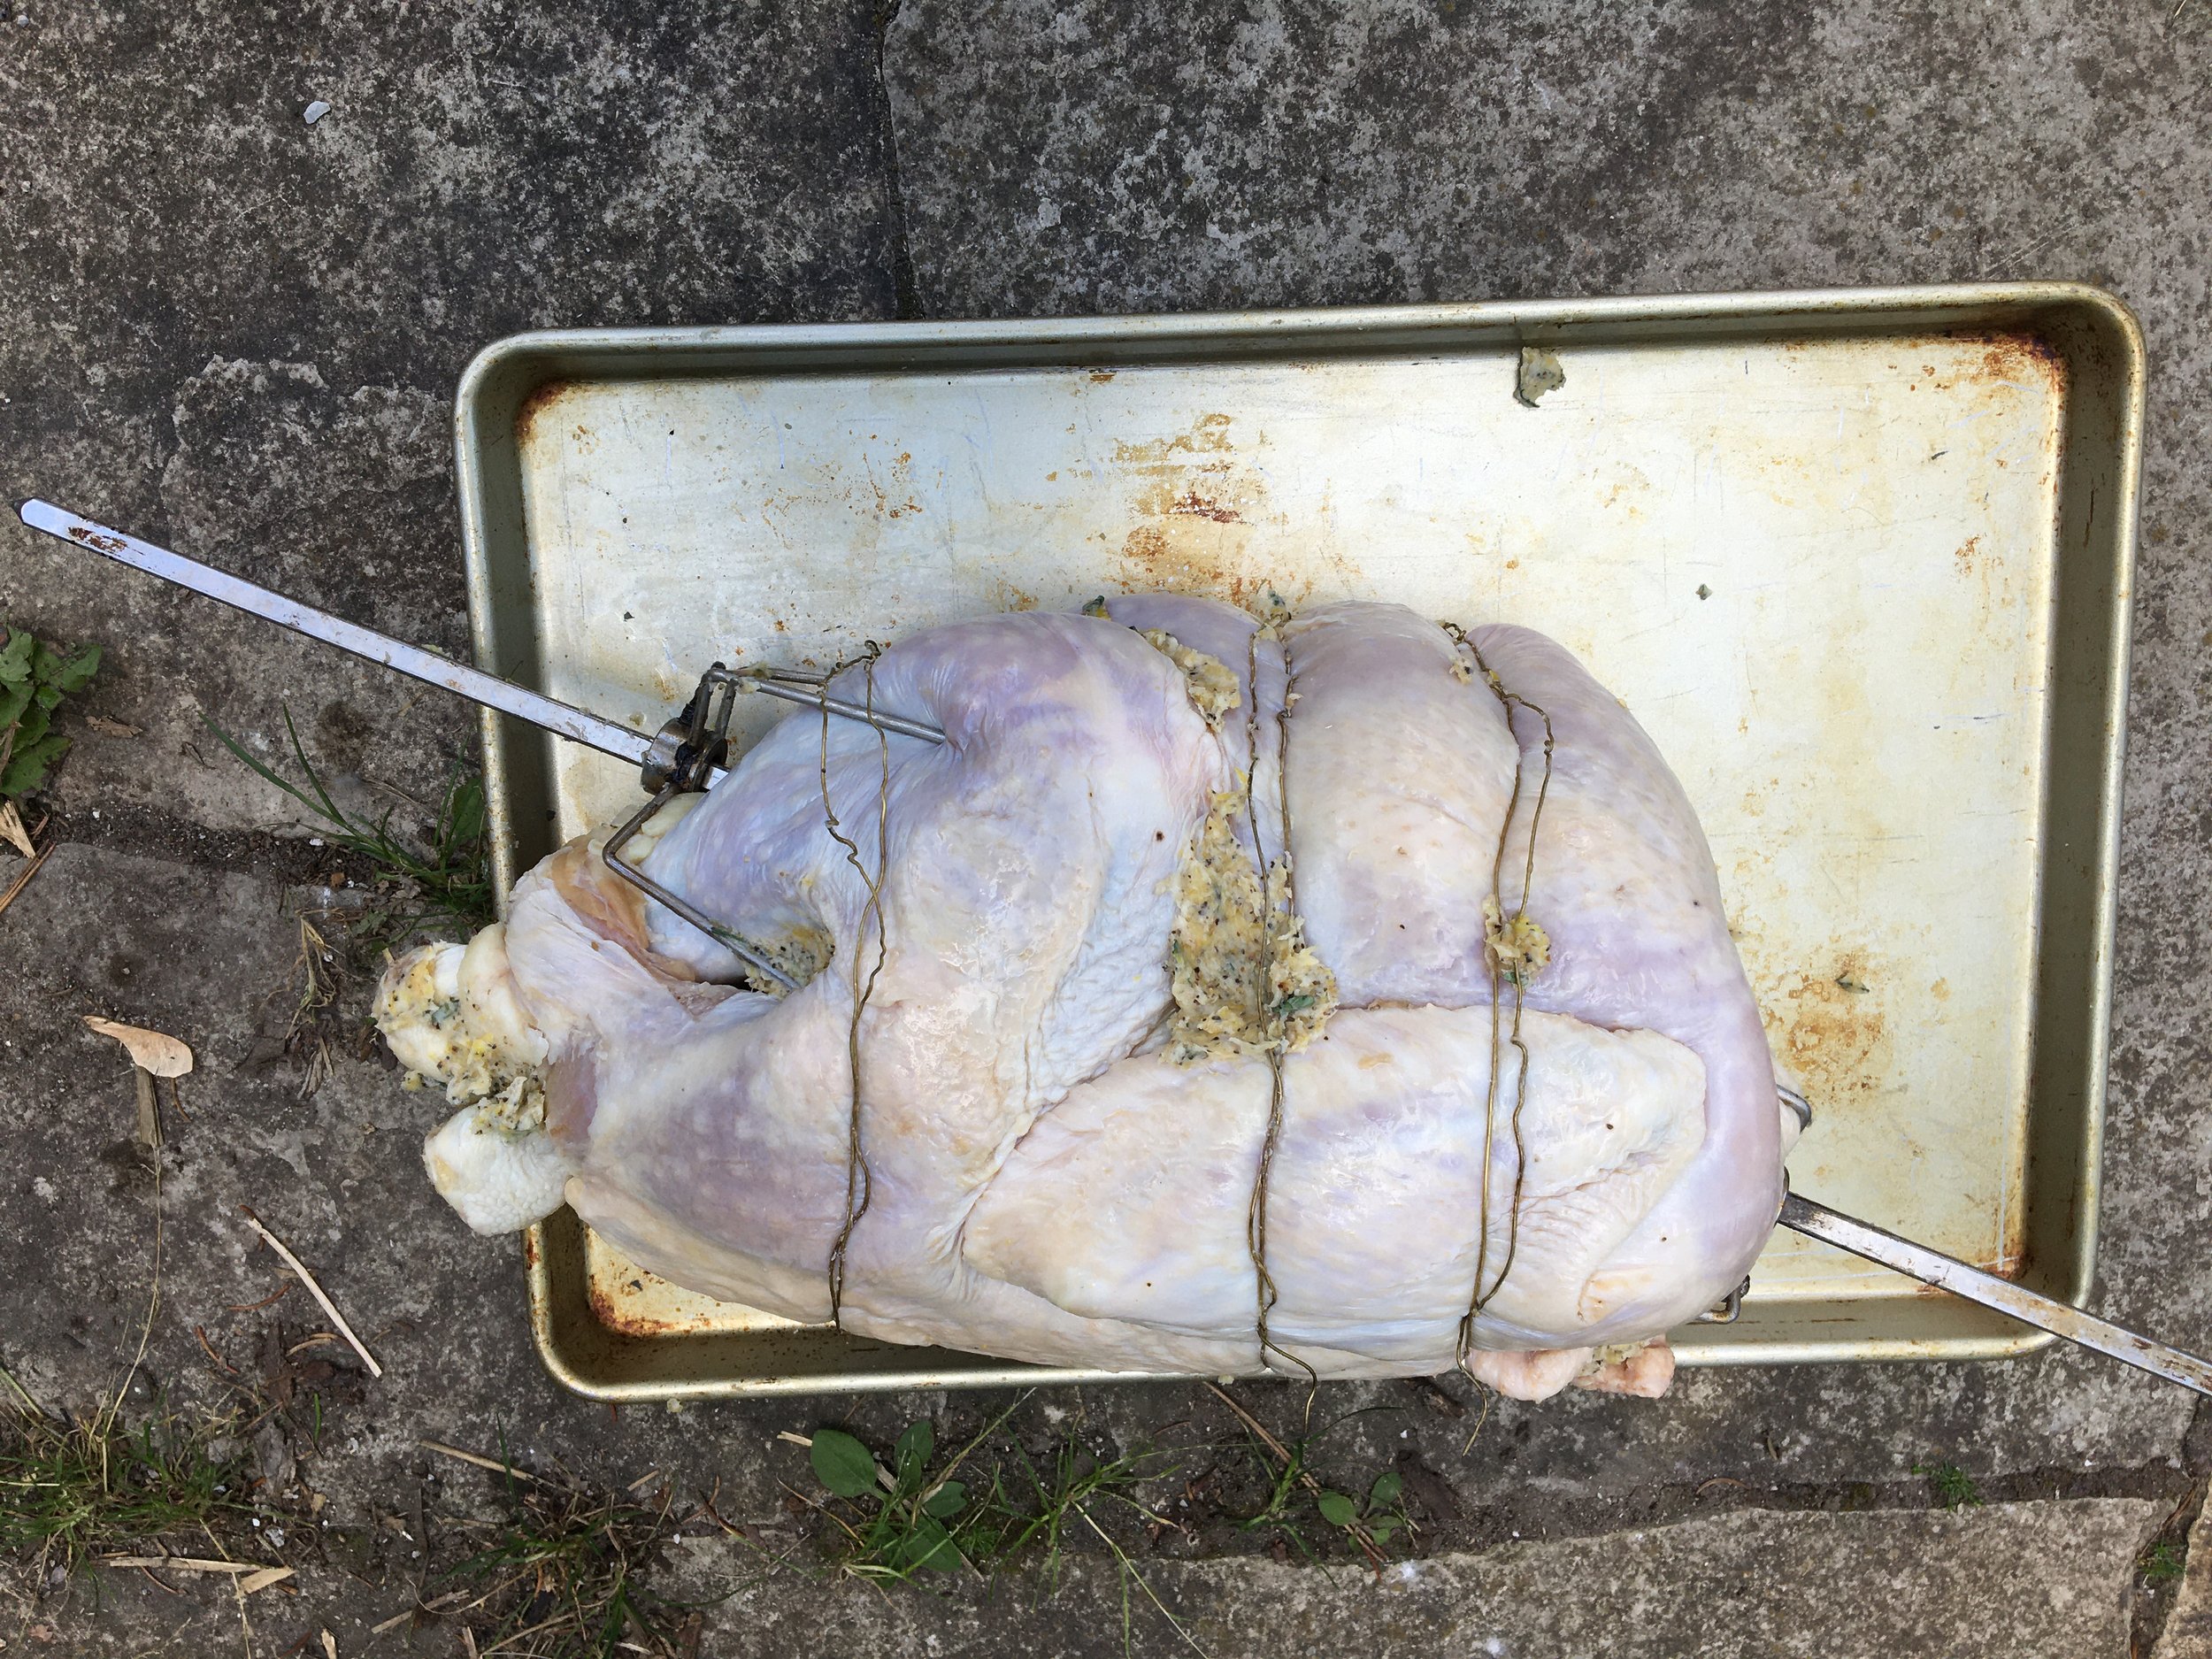 Turkey mounted on spit.